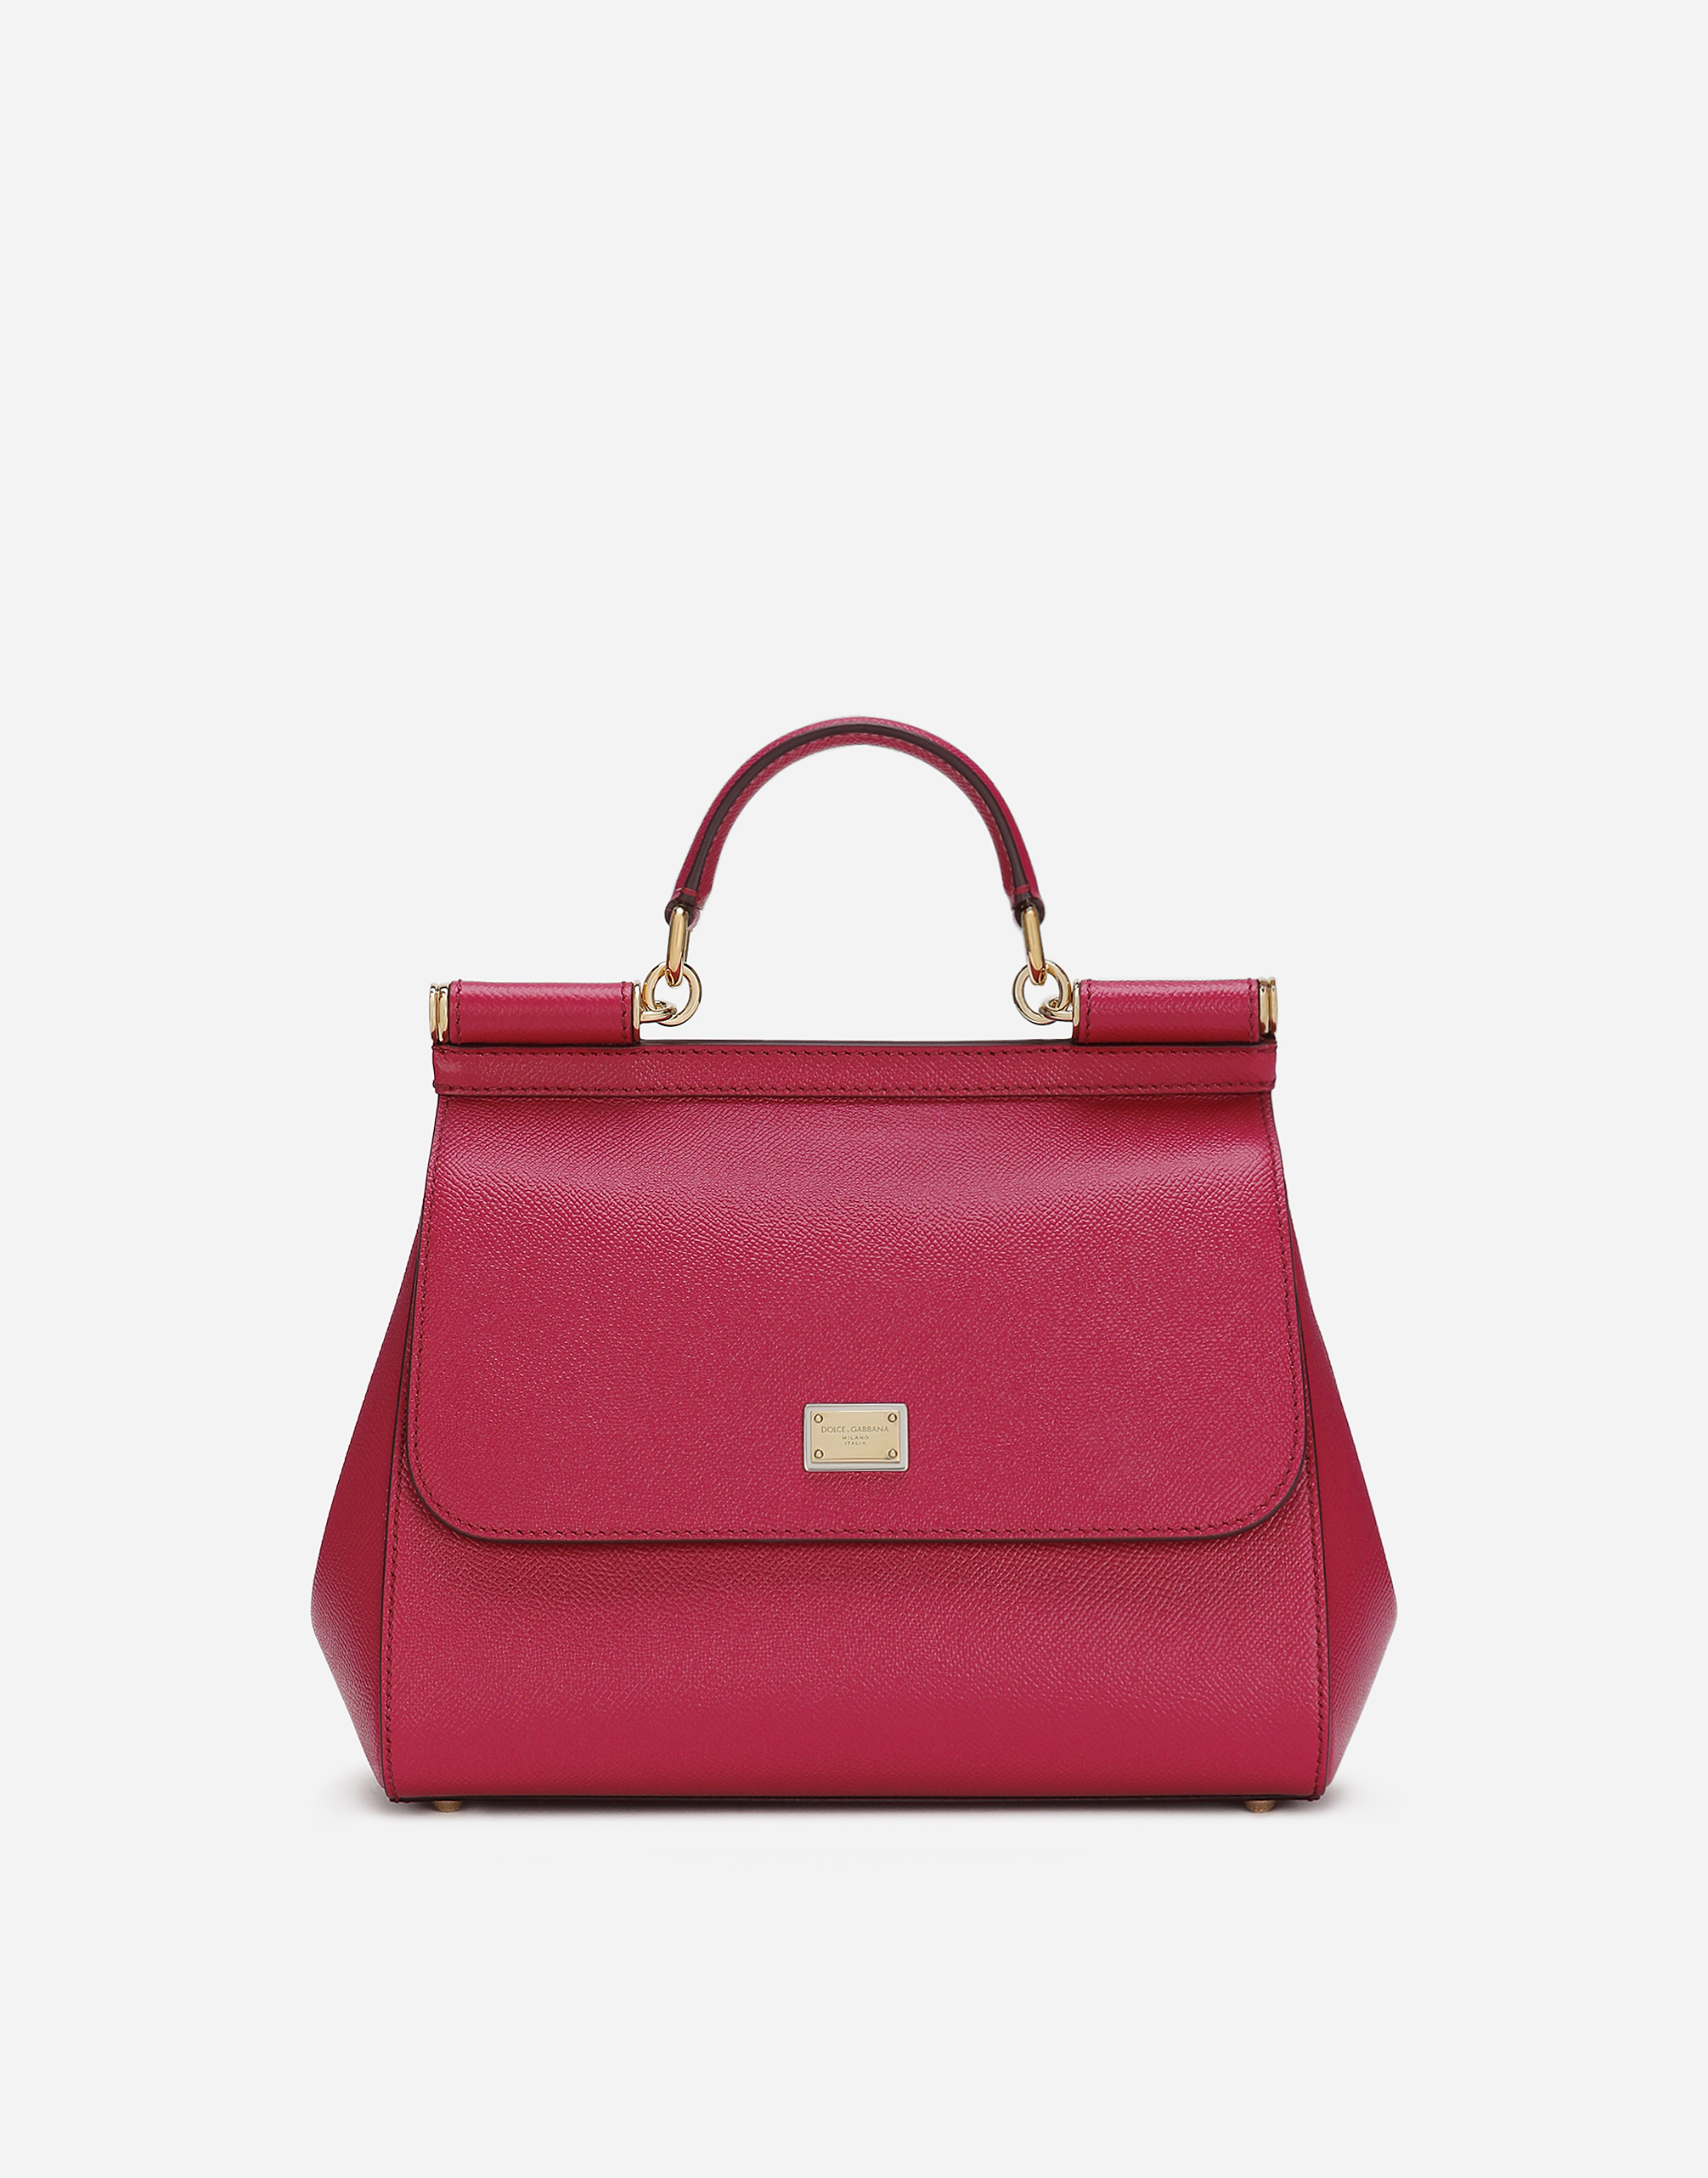 Large Sicily handbag in Fuchsia for Women | Dolce&Gabbana®